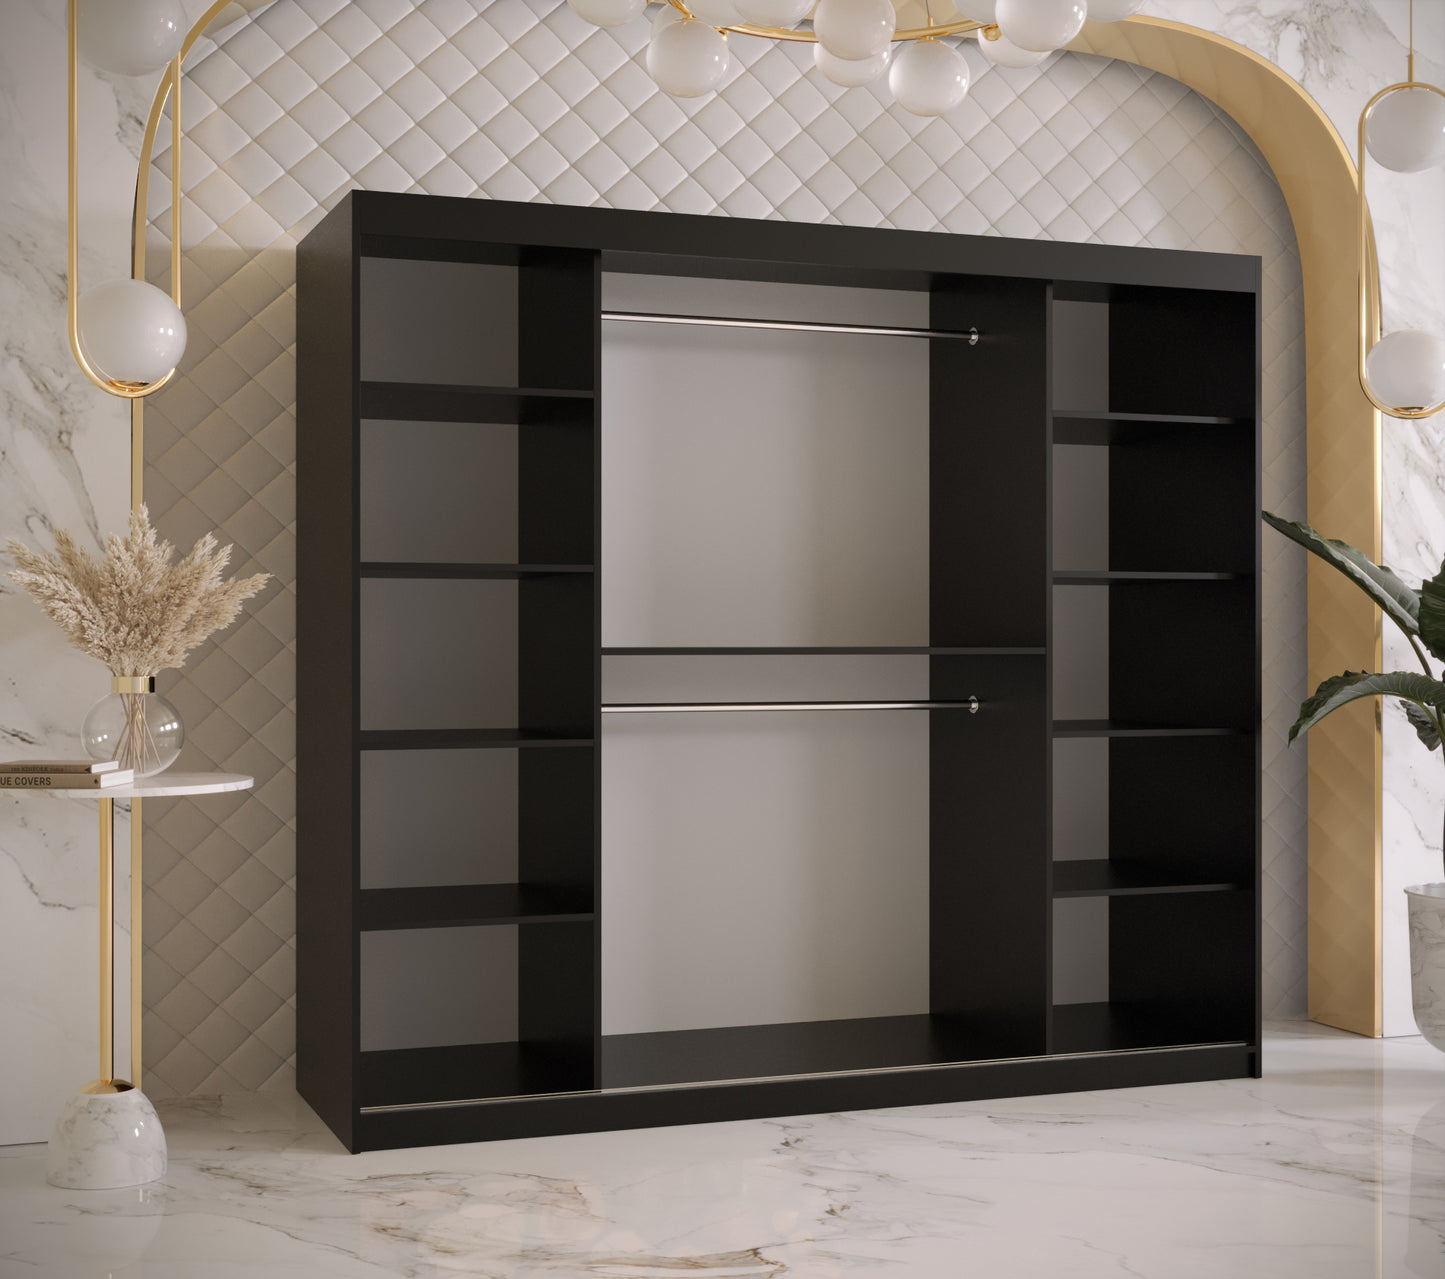 RAMIRA 2 - Wardrobe Sliding Door with Mirror in Black or White Combinations, Shelves, Rails, Drawer optional >200cm<